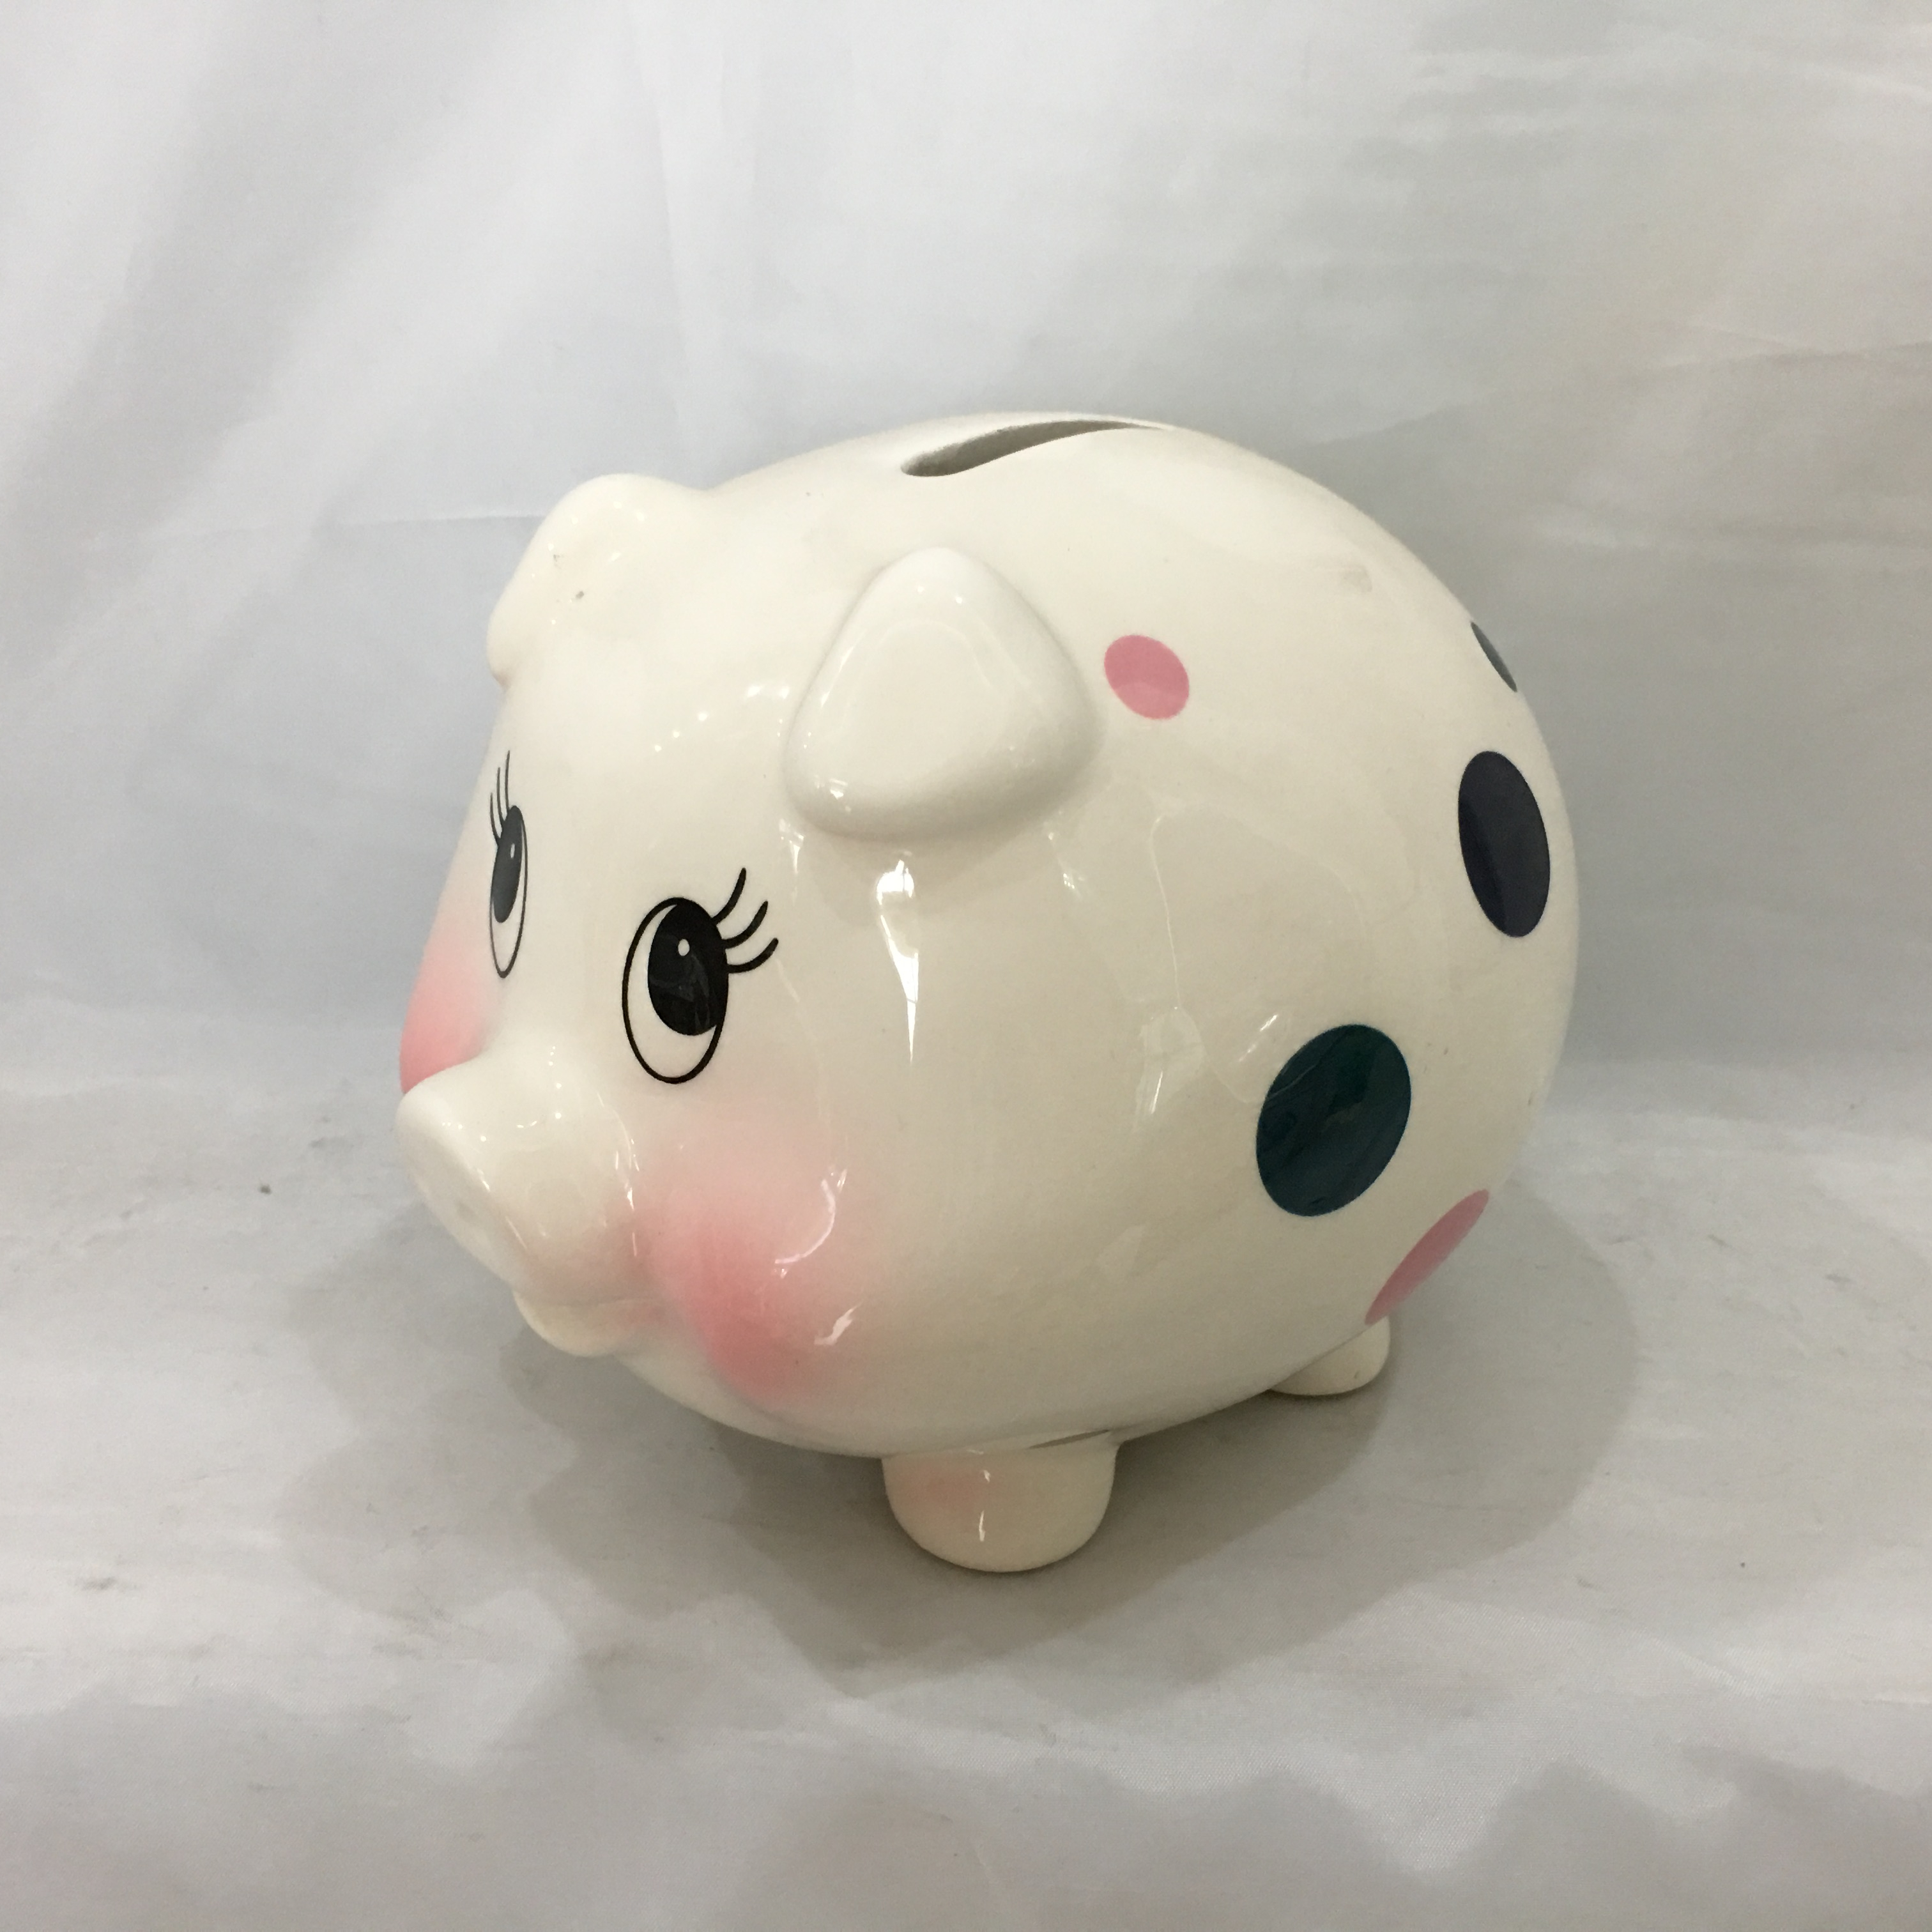 2019 All kinds pig shape ceramic coin bank cute piggy design money bank